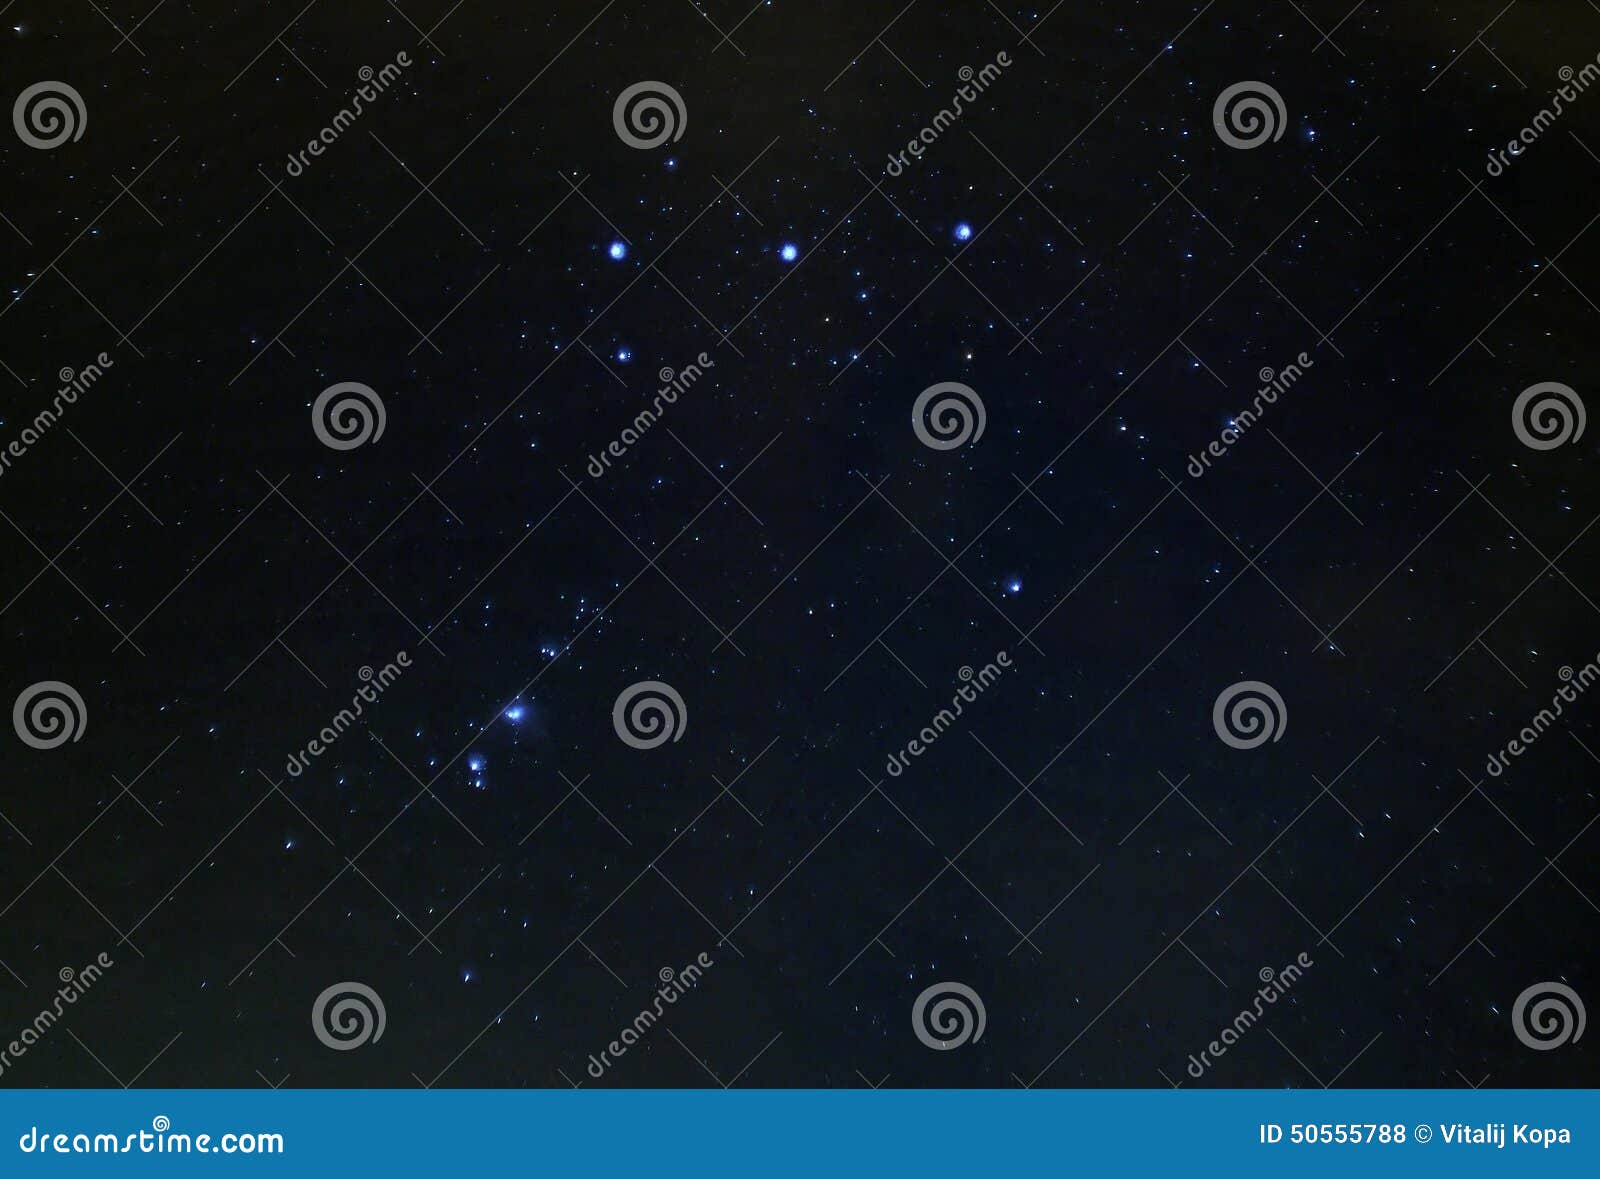 orion constellation stars in night sky